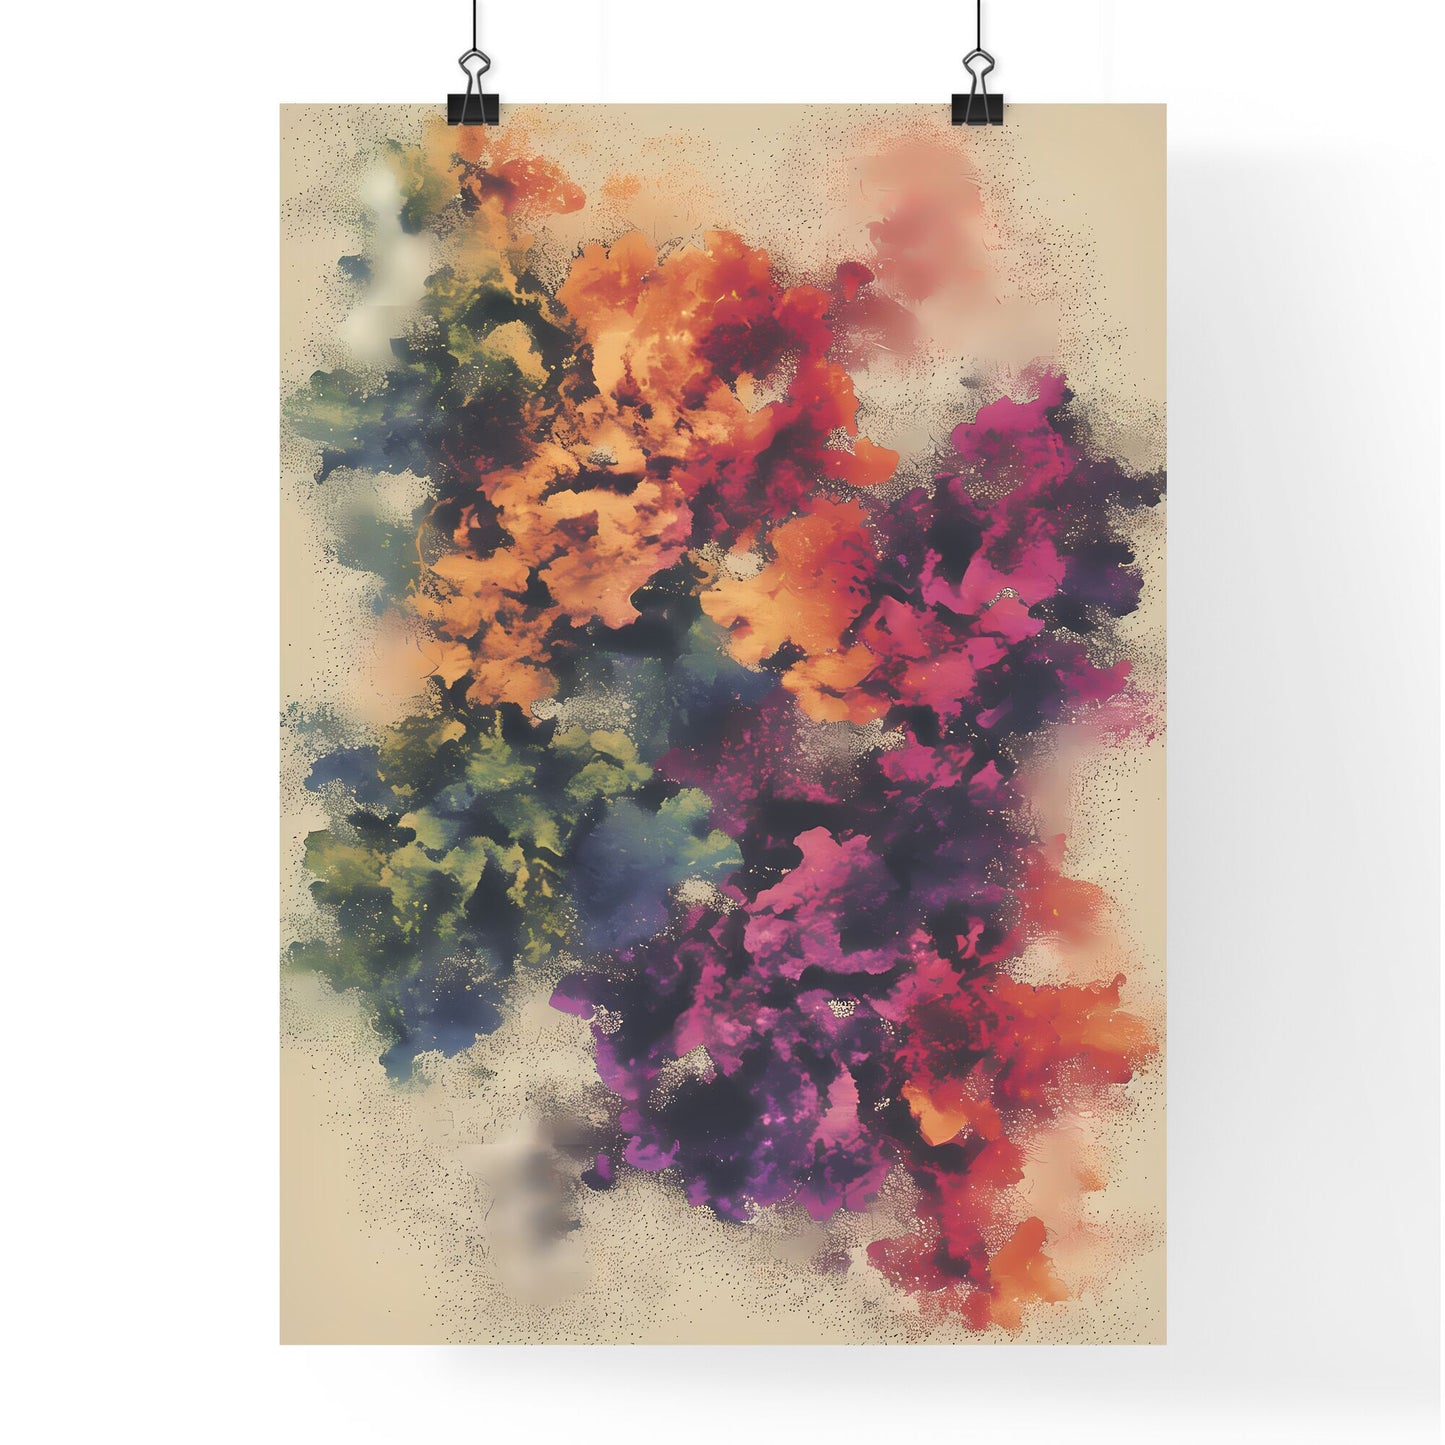 A botanical arrangement - Art print of a group of colorful ink splatters Default Title